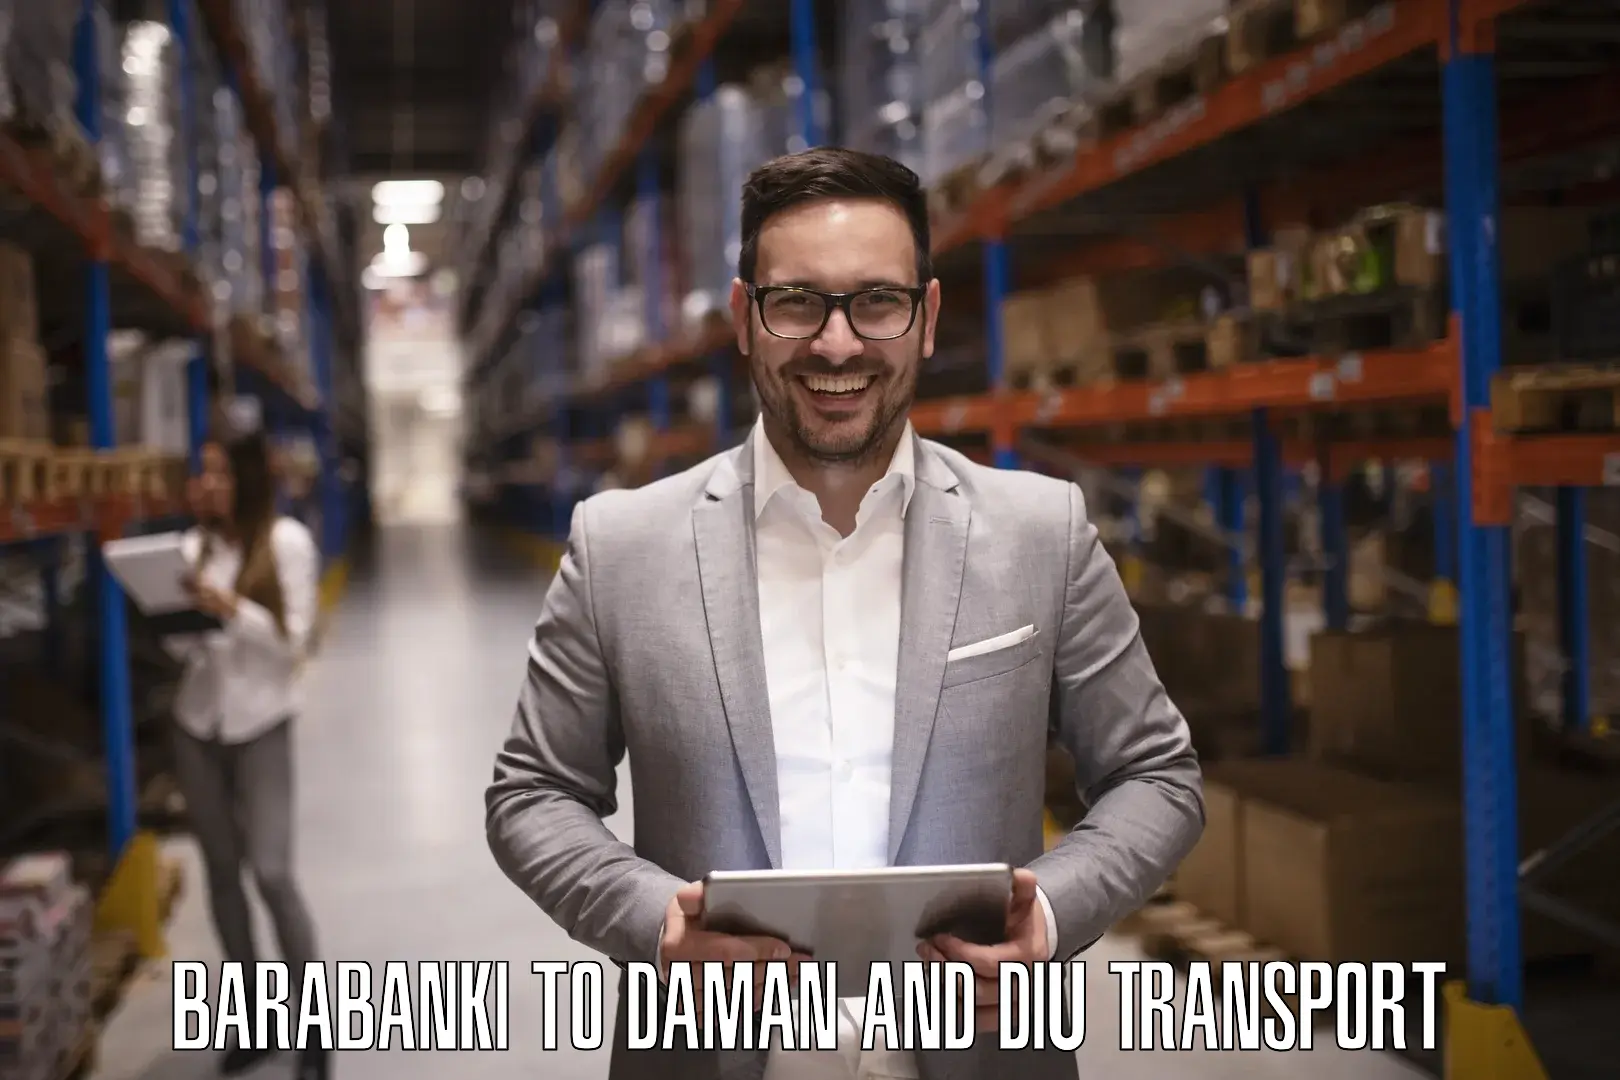 Daily transport service Barabanki to Diu